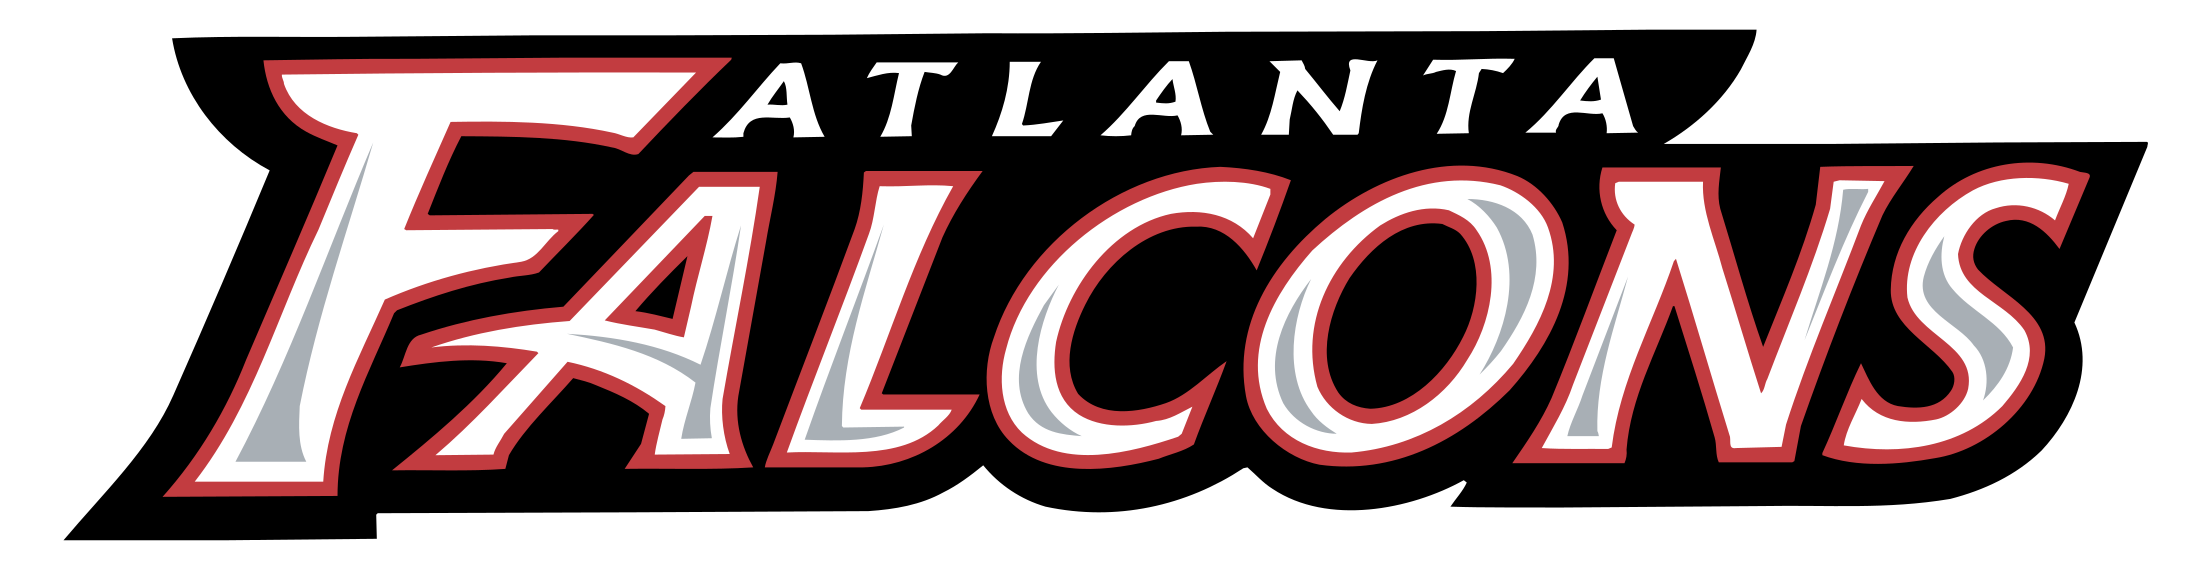 Atlanta Falcons Text Logo PNG HD Quality PNG Play